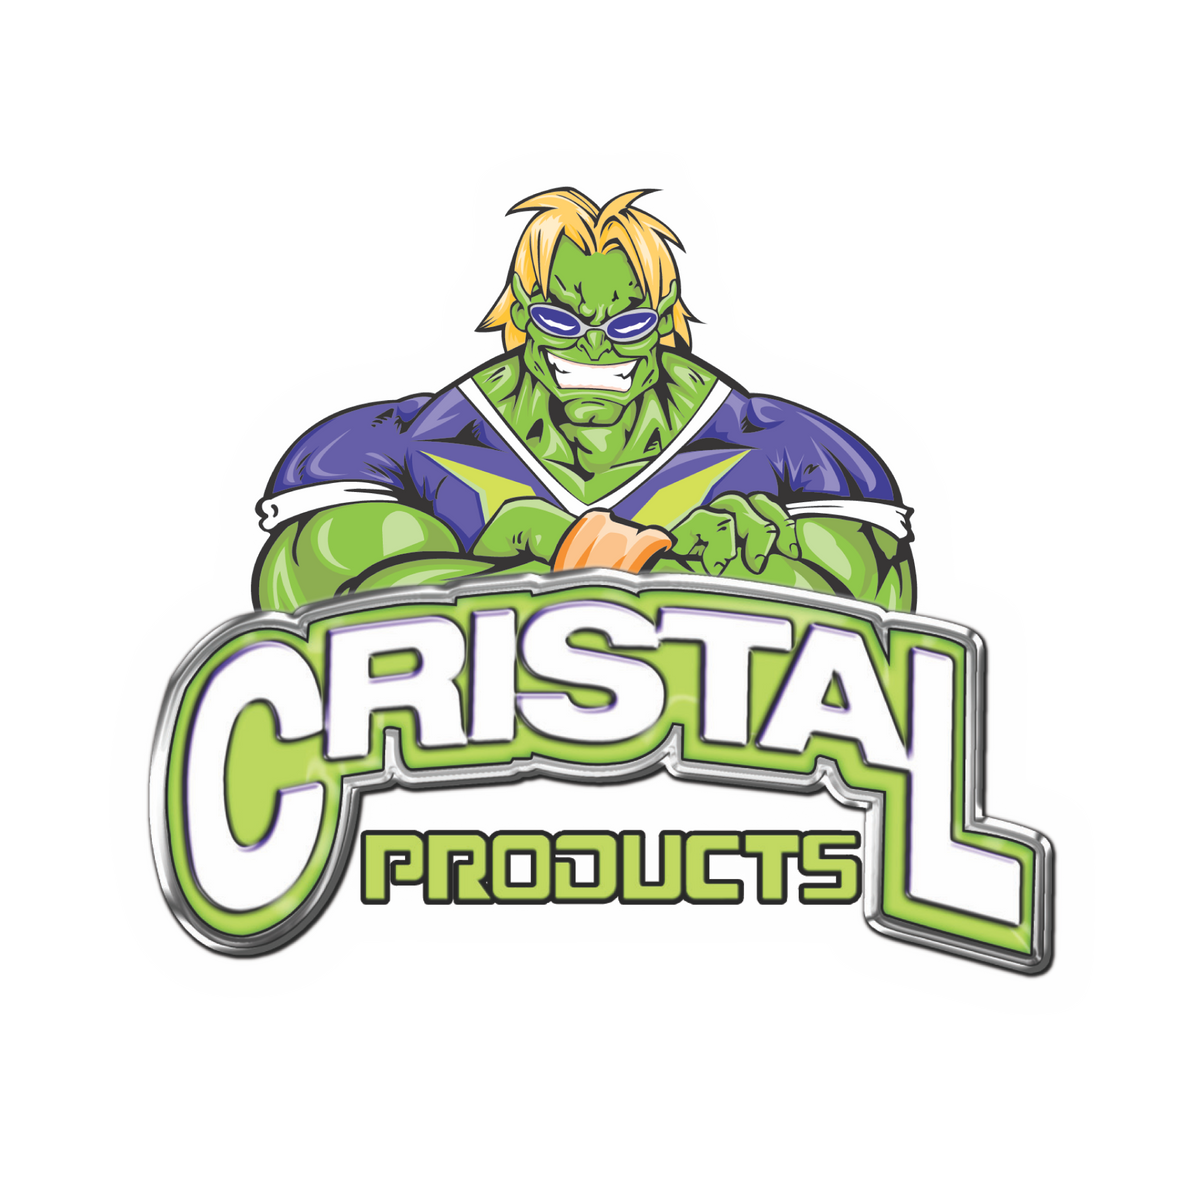 CRISTAL PRODUCTS USA - Chyasa Inc.